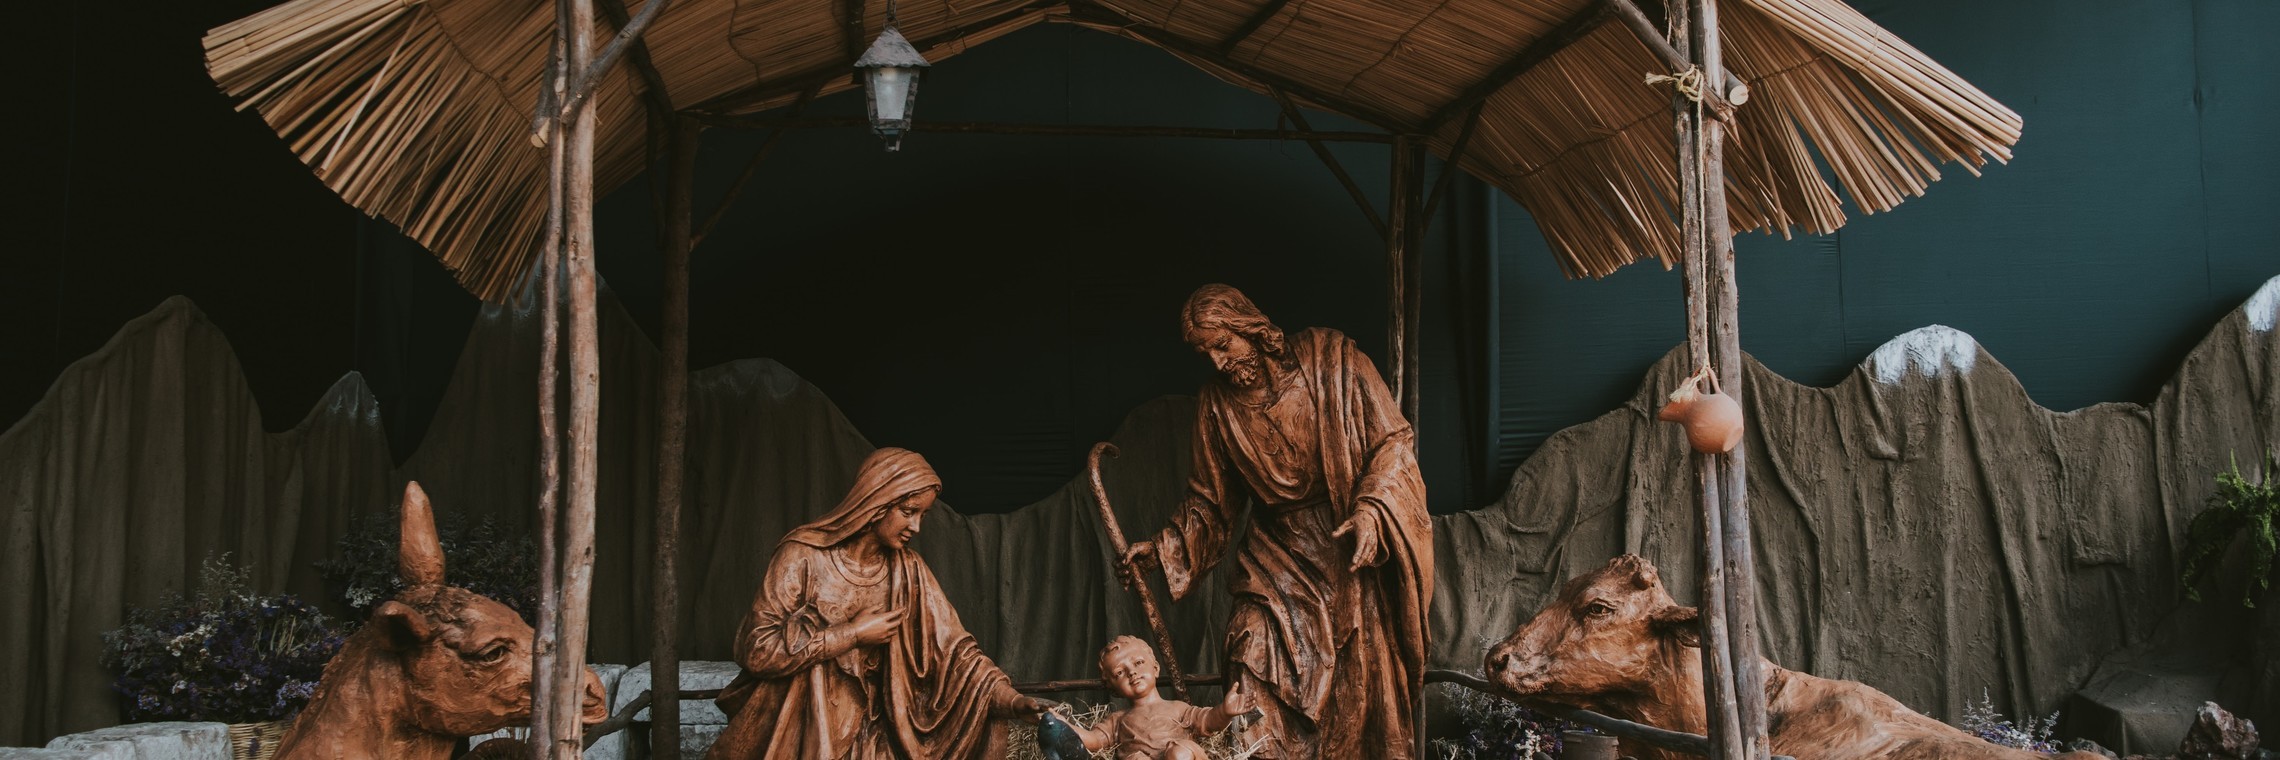 Christ child in a manger